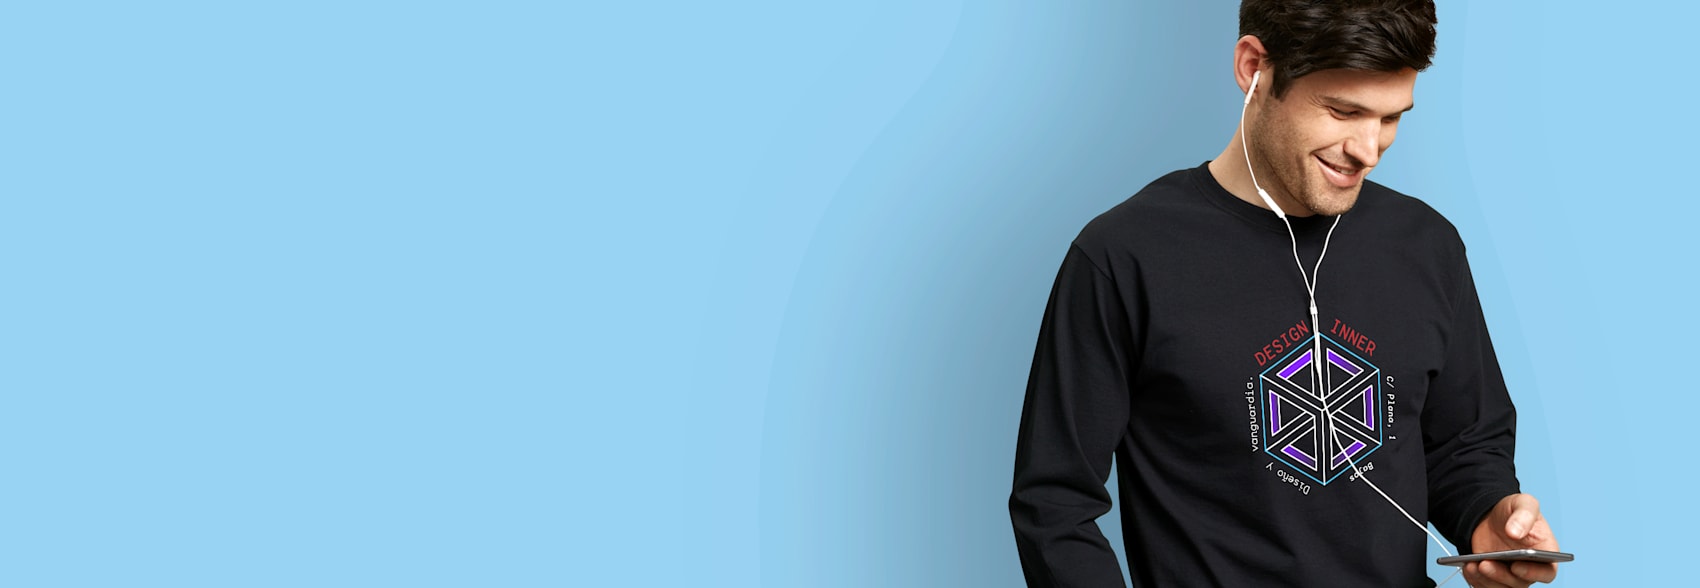 bruscamente desempleo Lechuguilla Camisetas personalizadas, impresión camisetas estampadas | Vistaprint